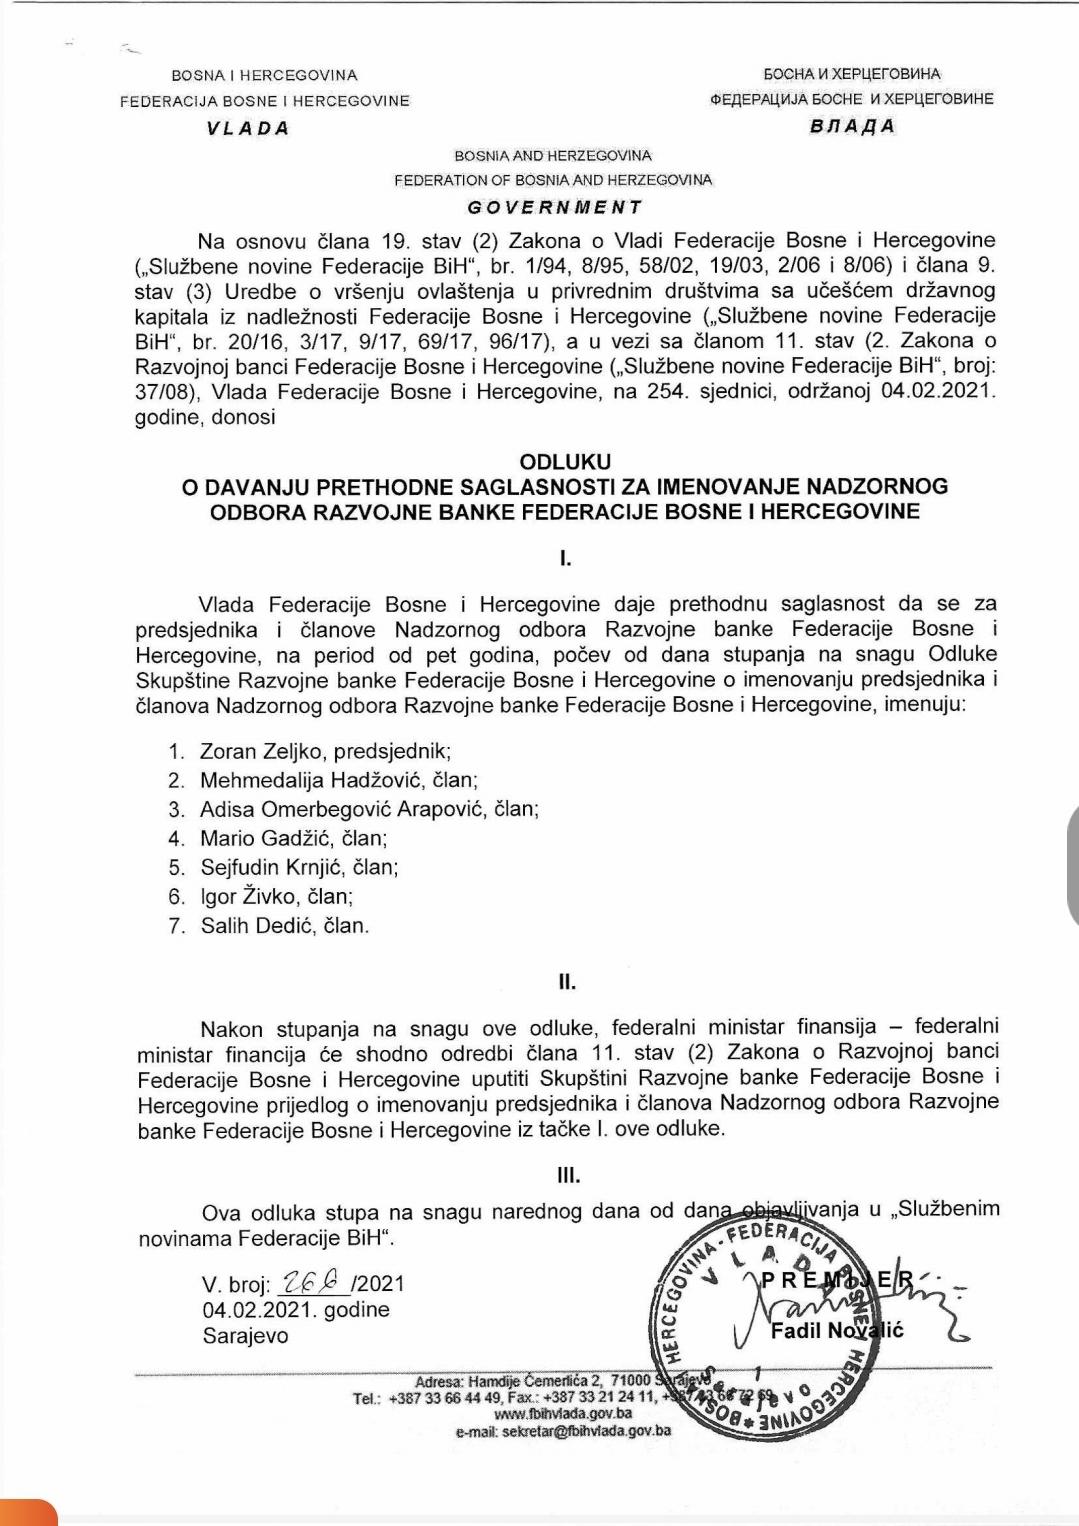 Dokaz da je Omerbegović-Arapović  imenovana u Nadzorni odbor Razvojne banke FBiH - Avaz